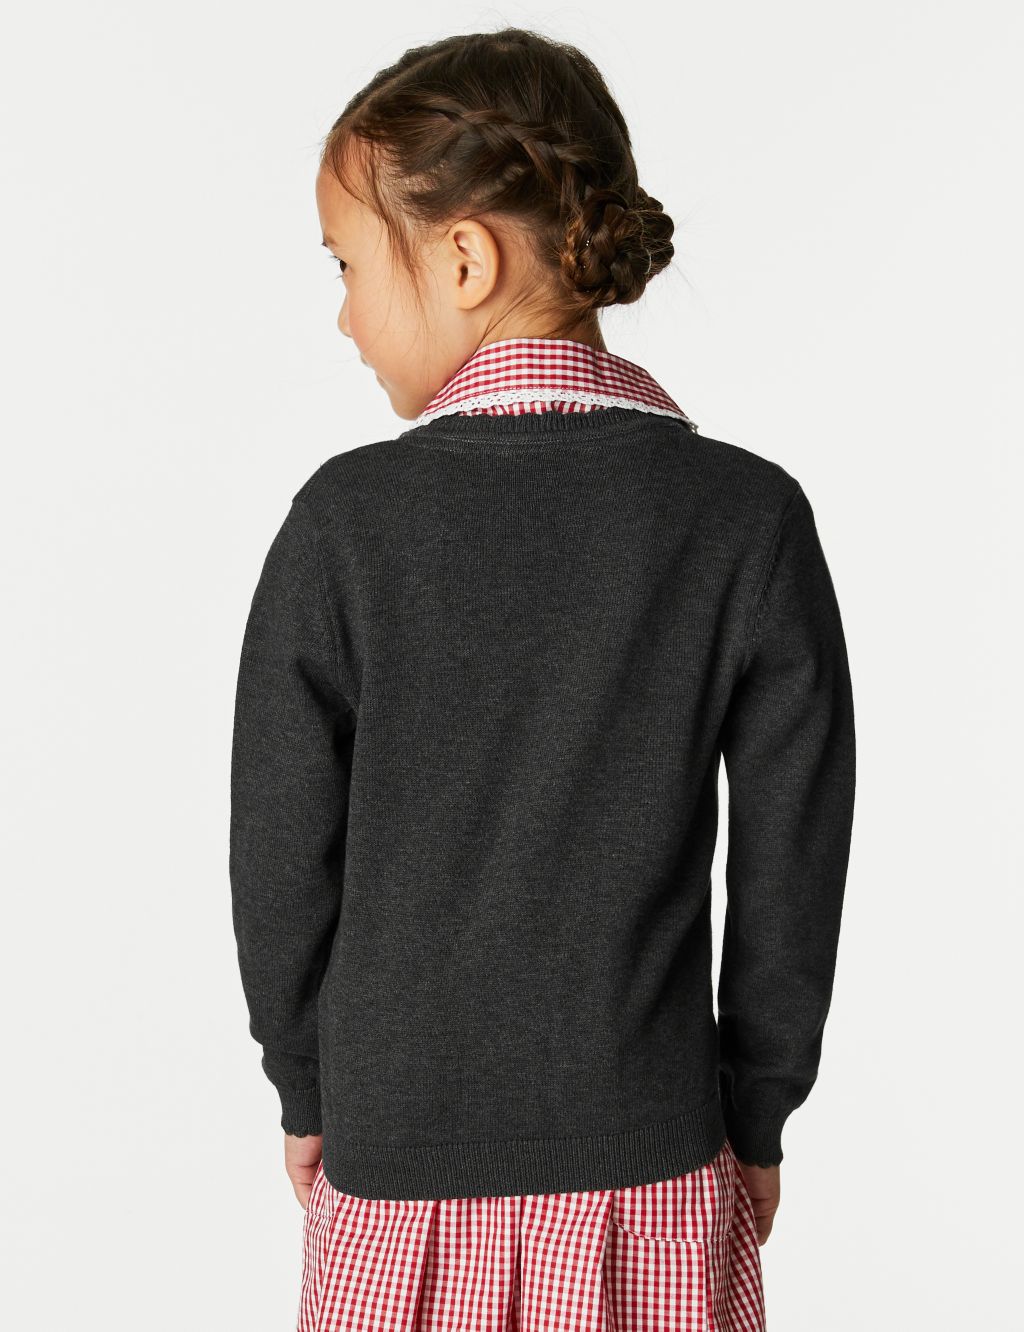 Girls’ Pure Cotton Bow Pocket School Cardigan (3-18 Yrs) image 4